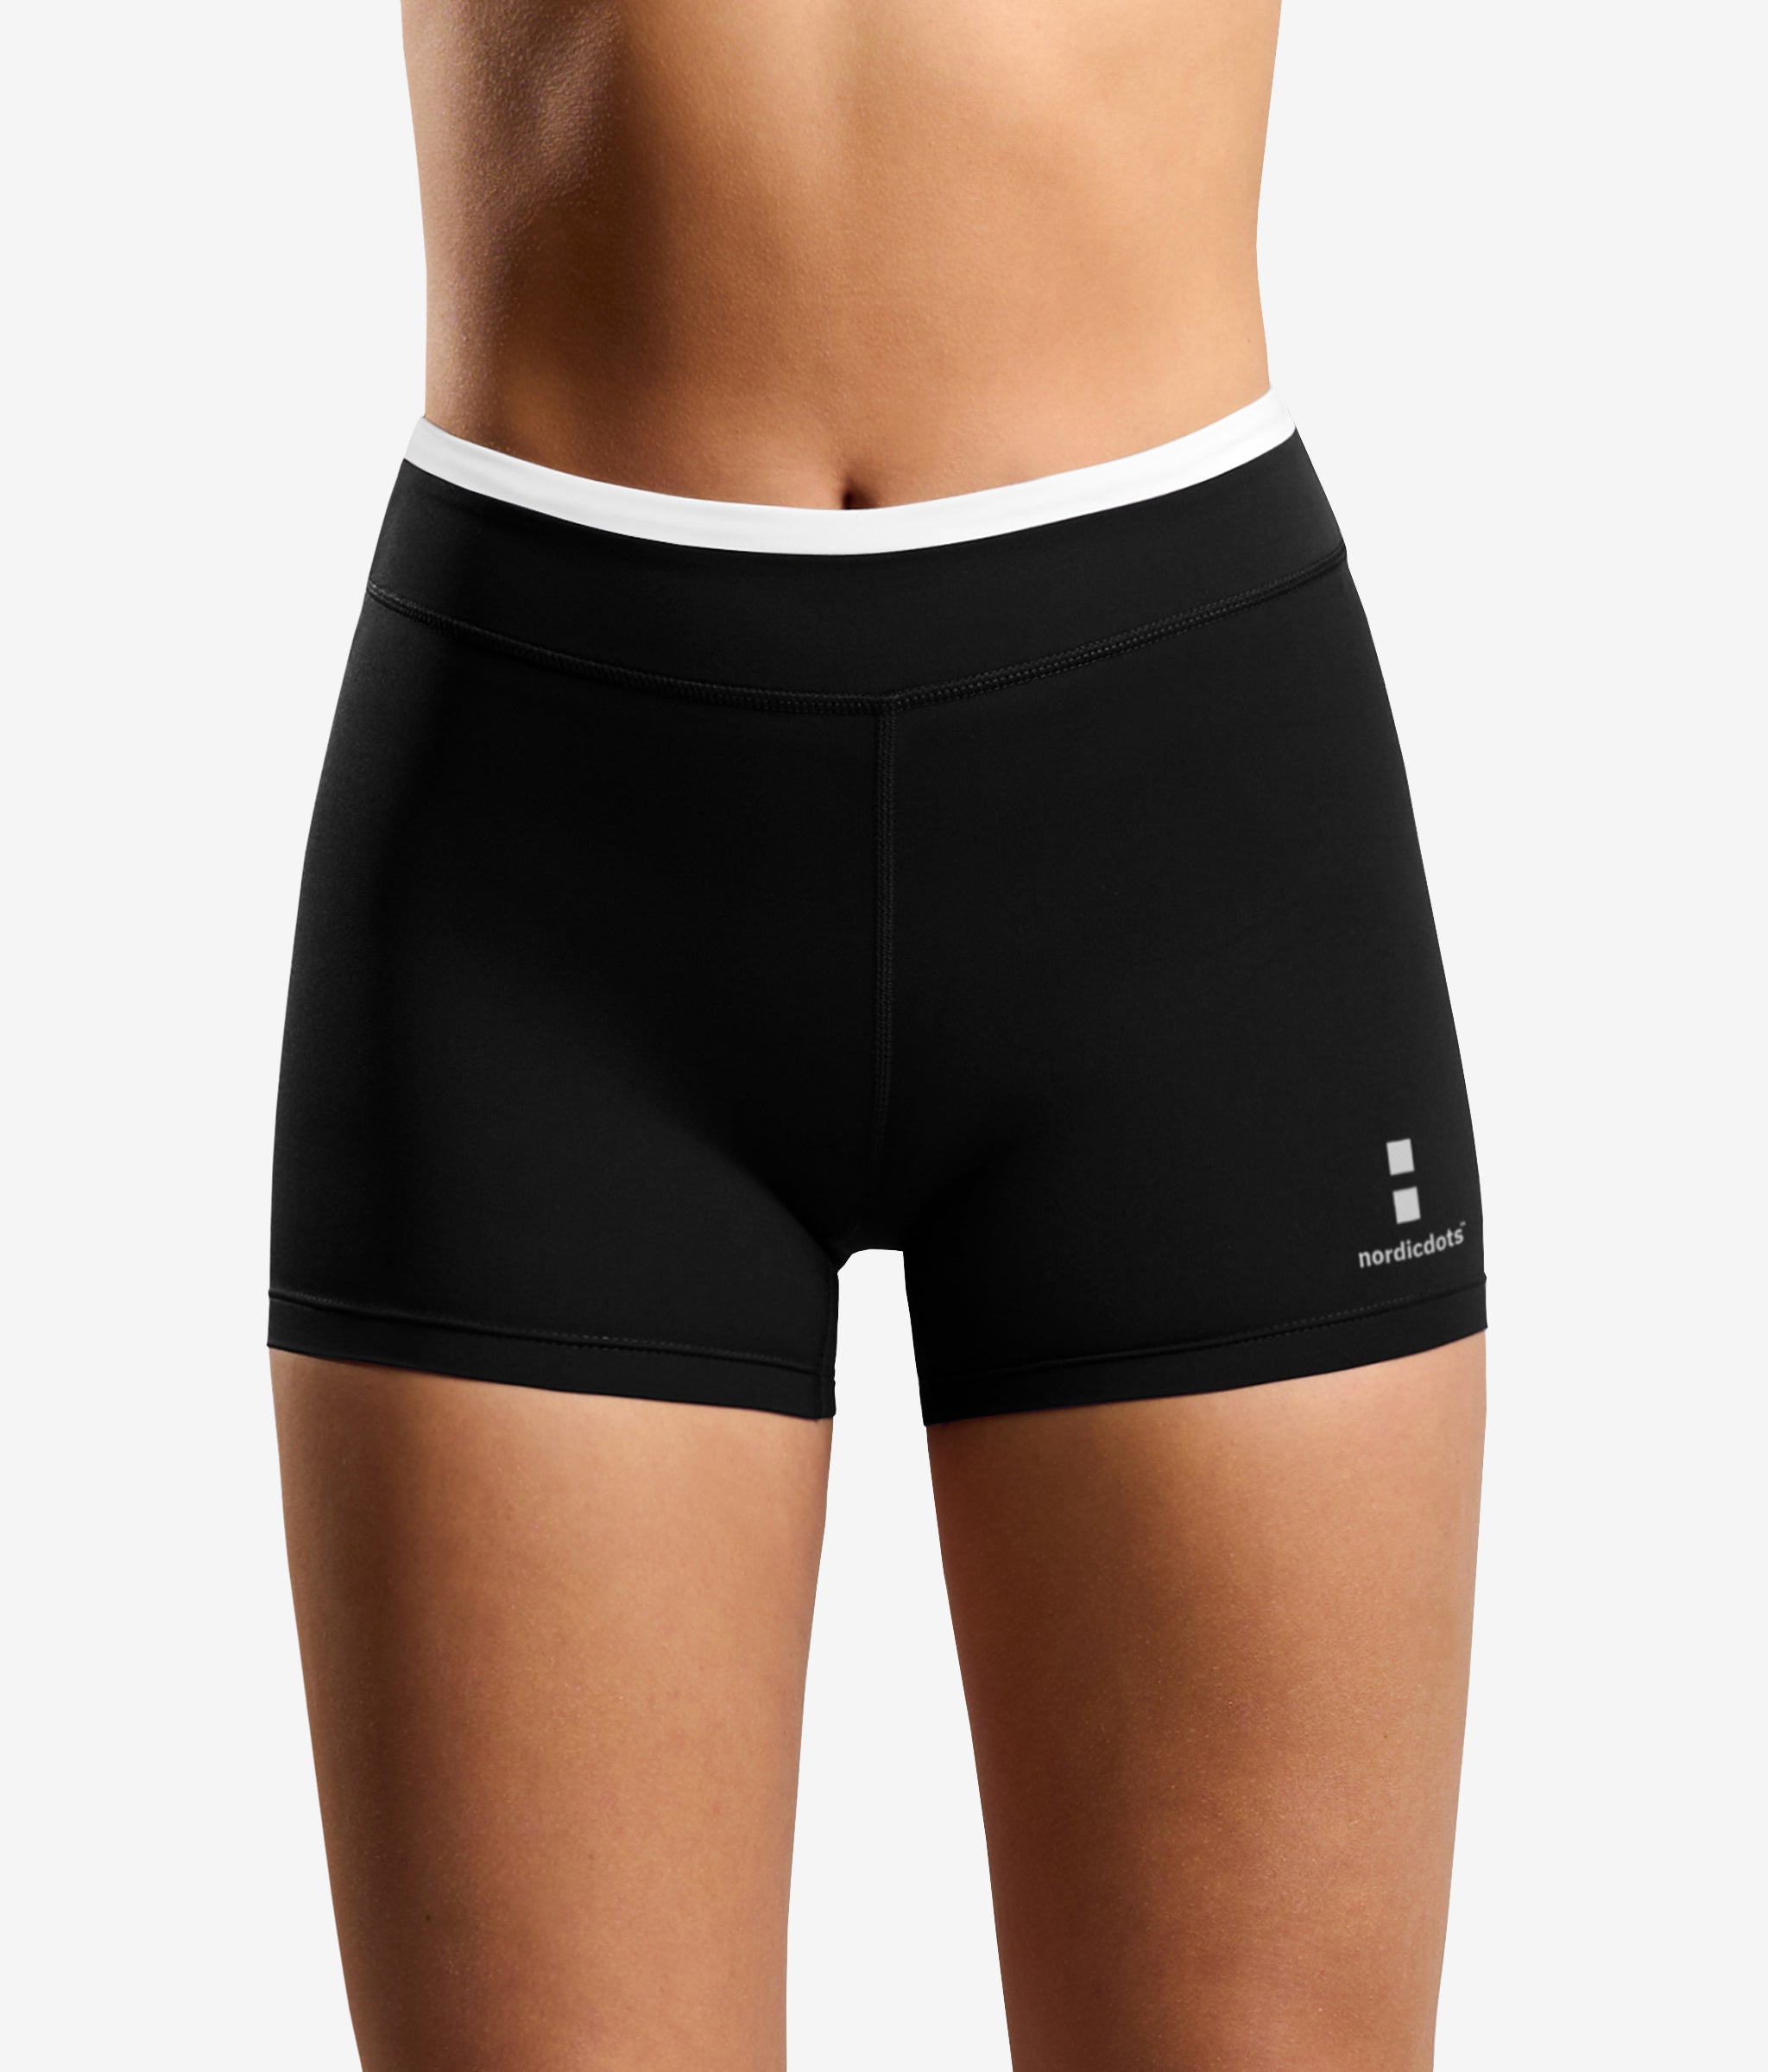 nordicdots women tennis padel tight shorts in black color tennis dress